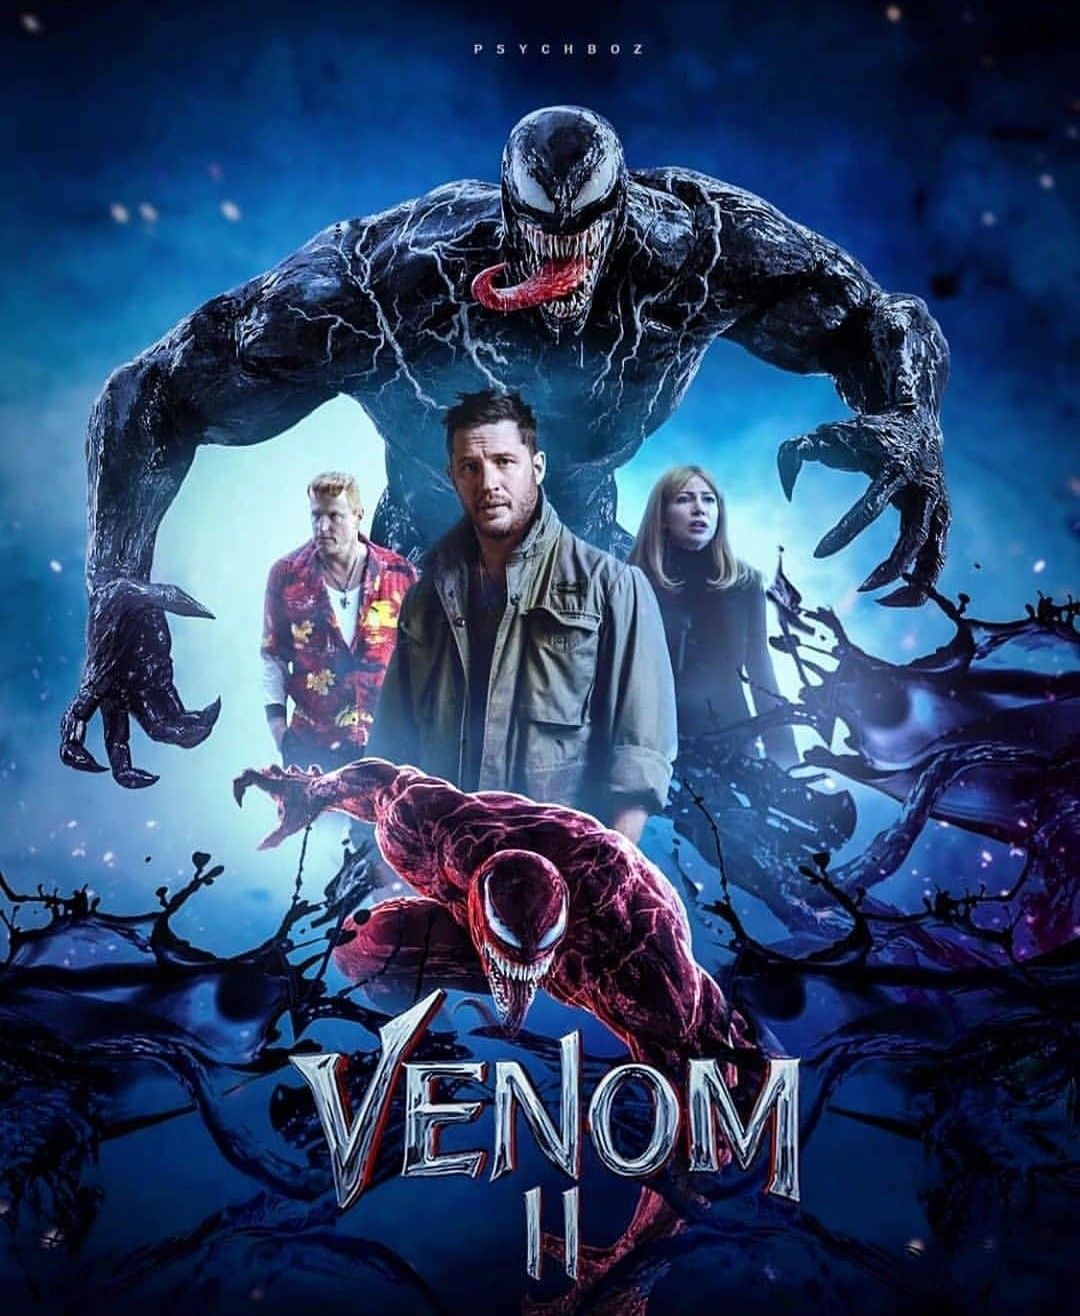 Venom, Let There Be Carnage ideas. carnage, venom, venom 2